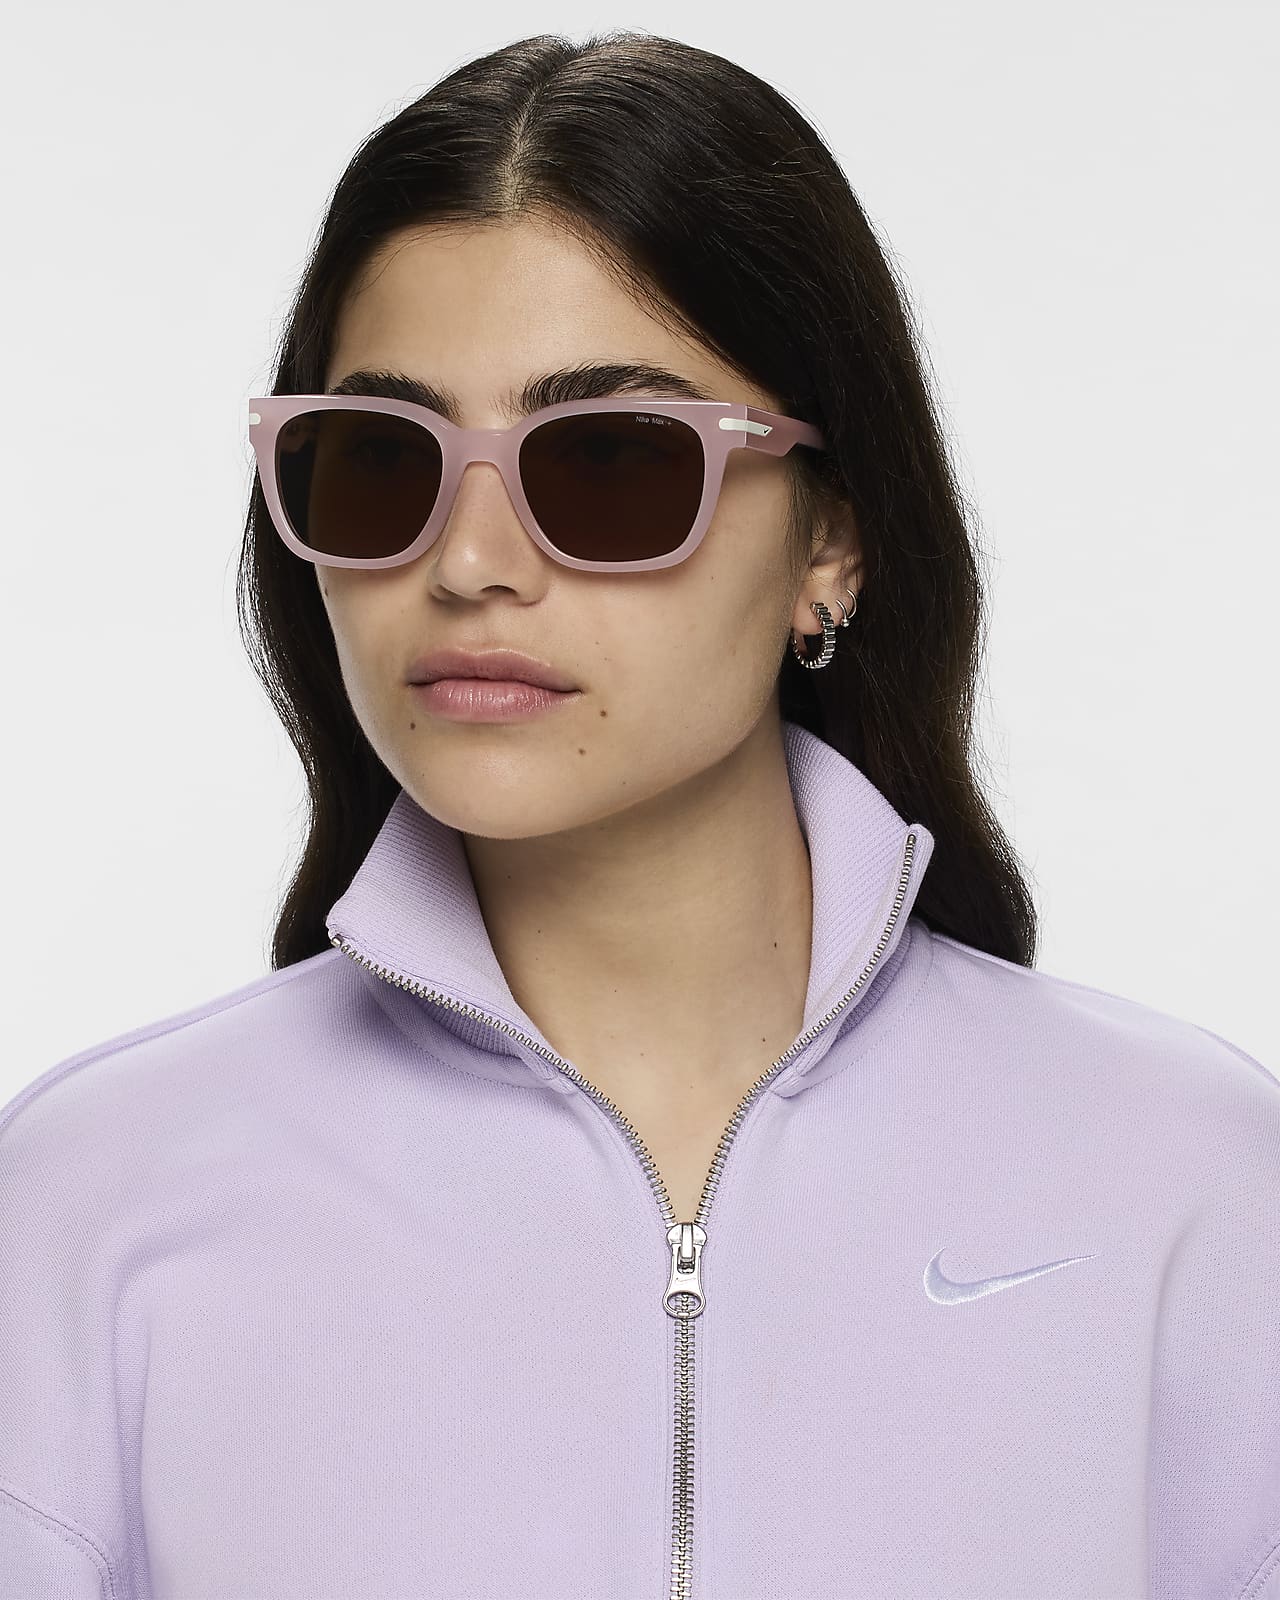 Nike Crescent II sunglasses